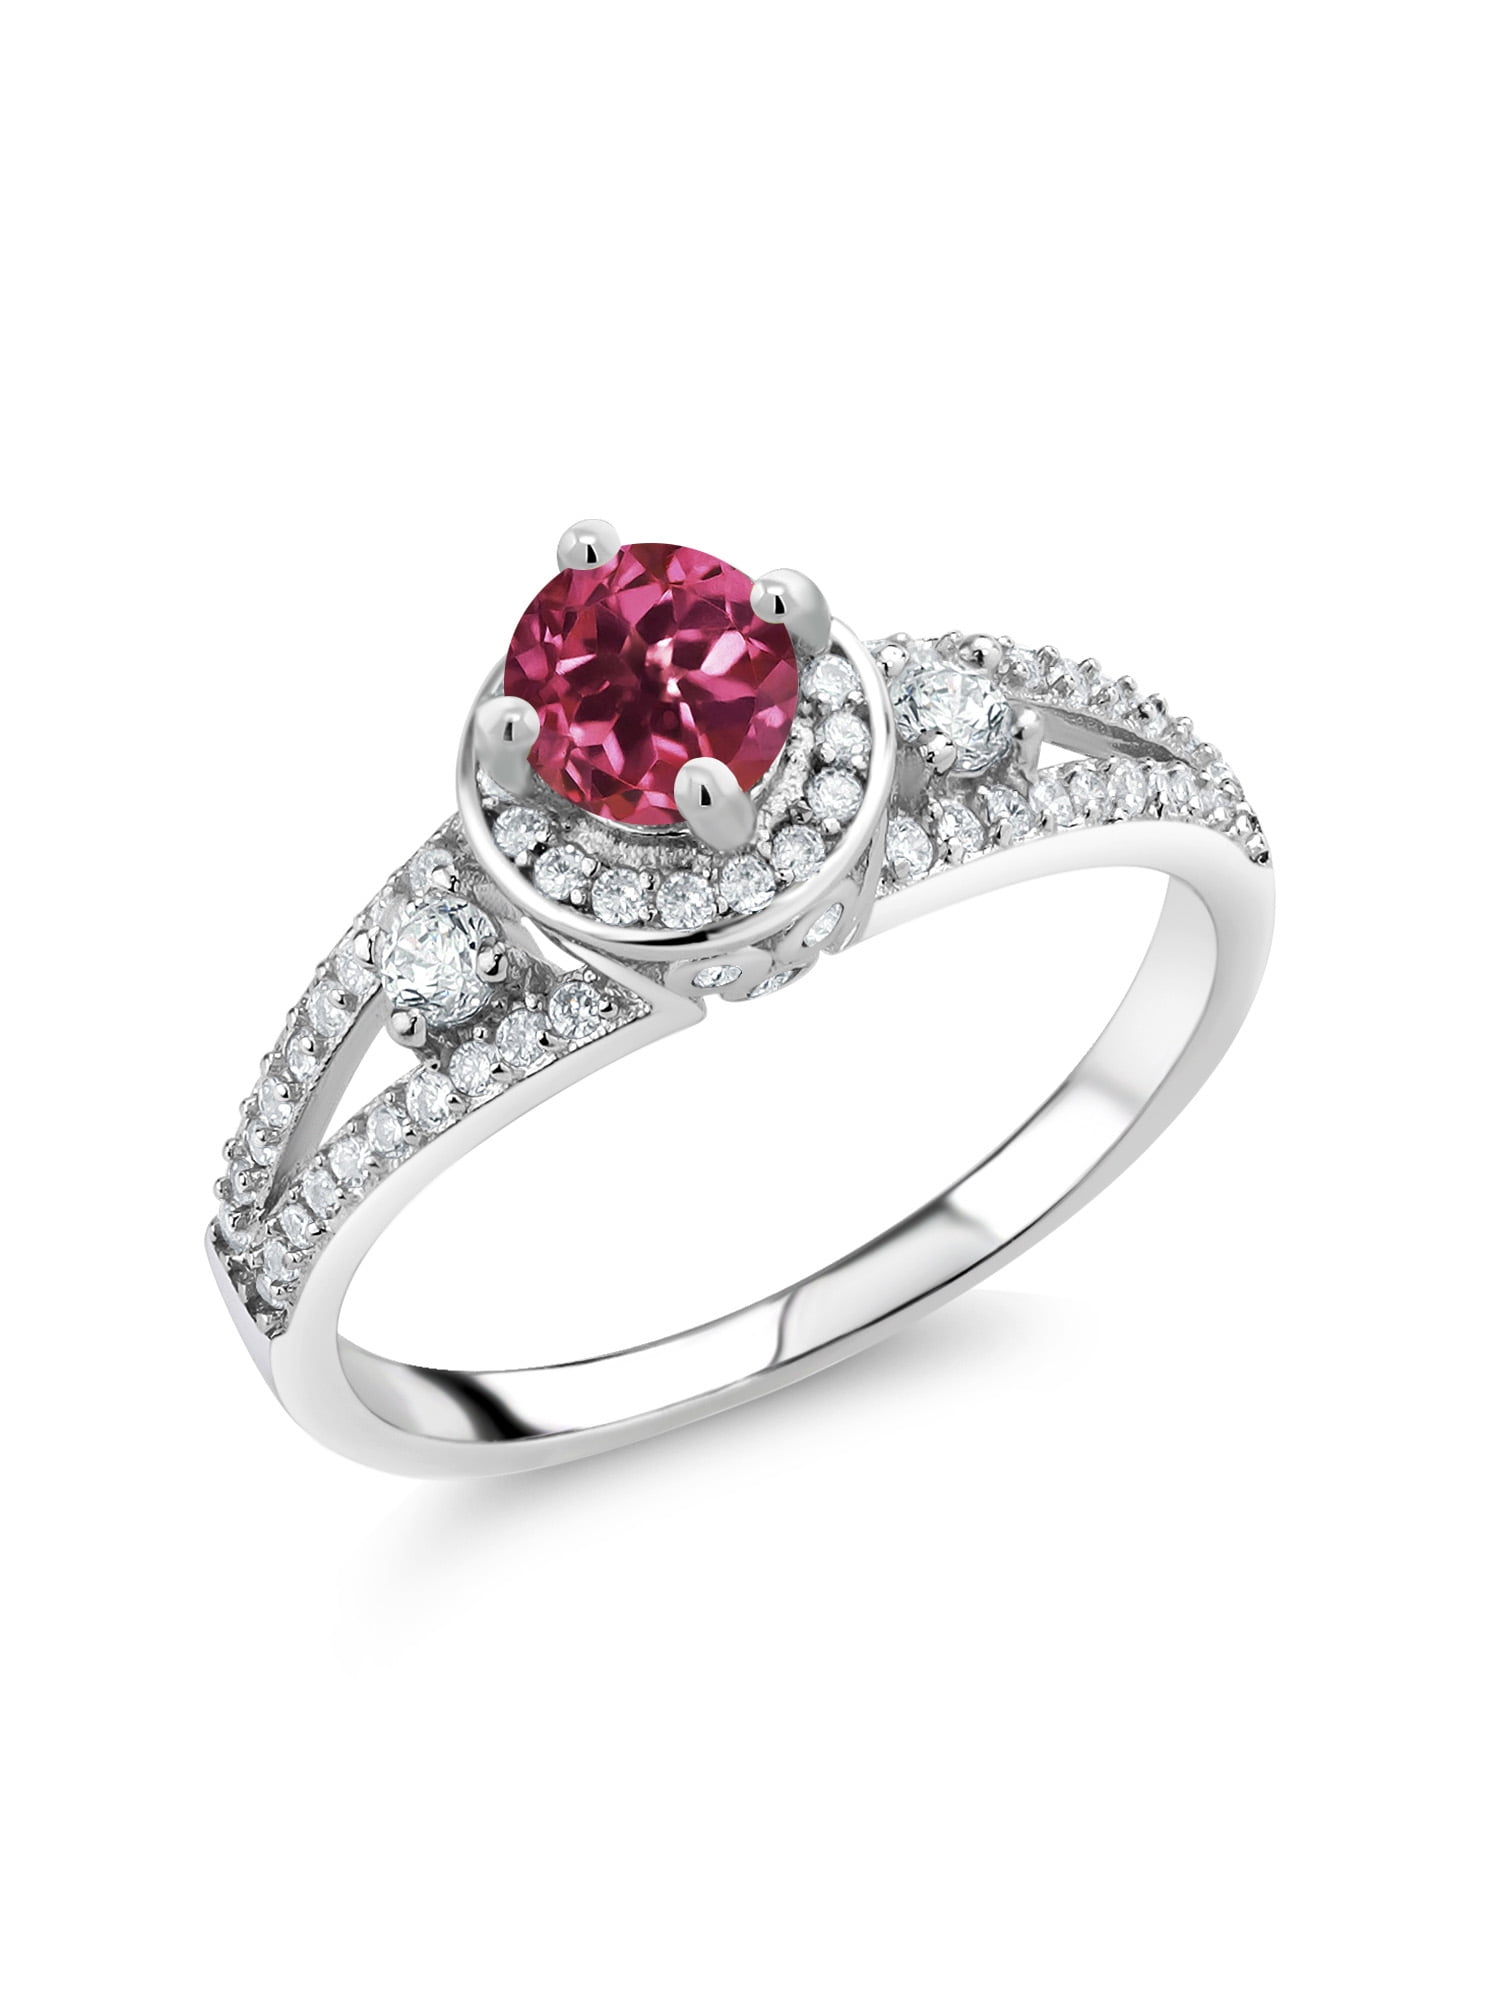 Gem Stone King 0.89 Ct 3.5mm Round Pink Tourmaline Red Rhodolite Garnet 925 Sterling Silver Wedding Band Ring